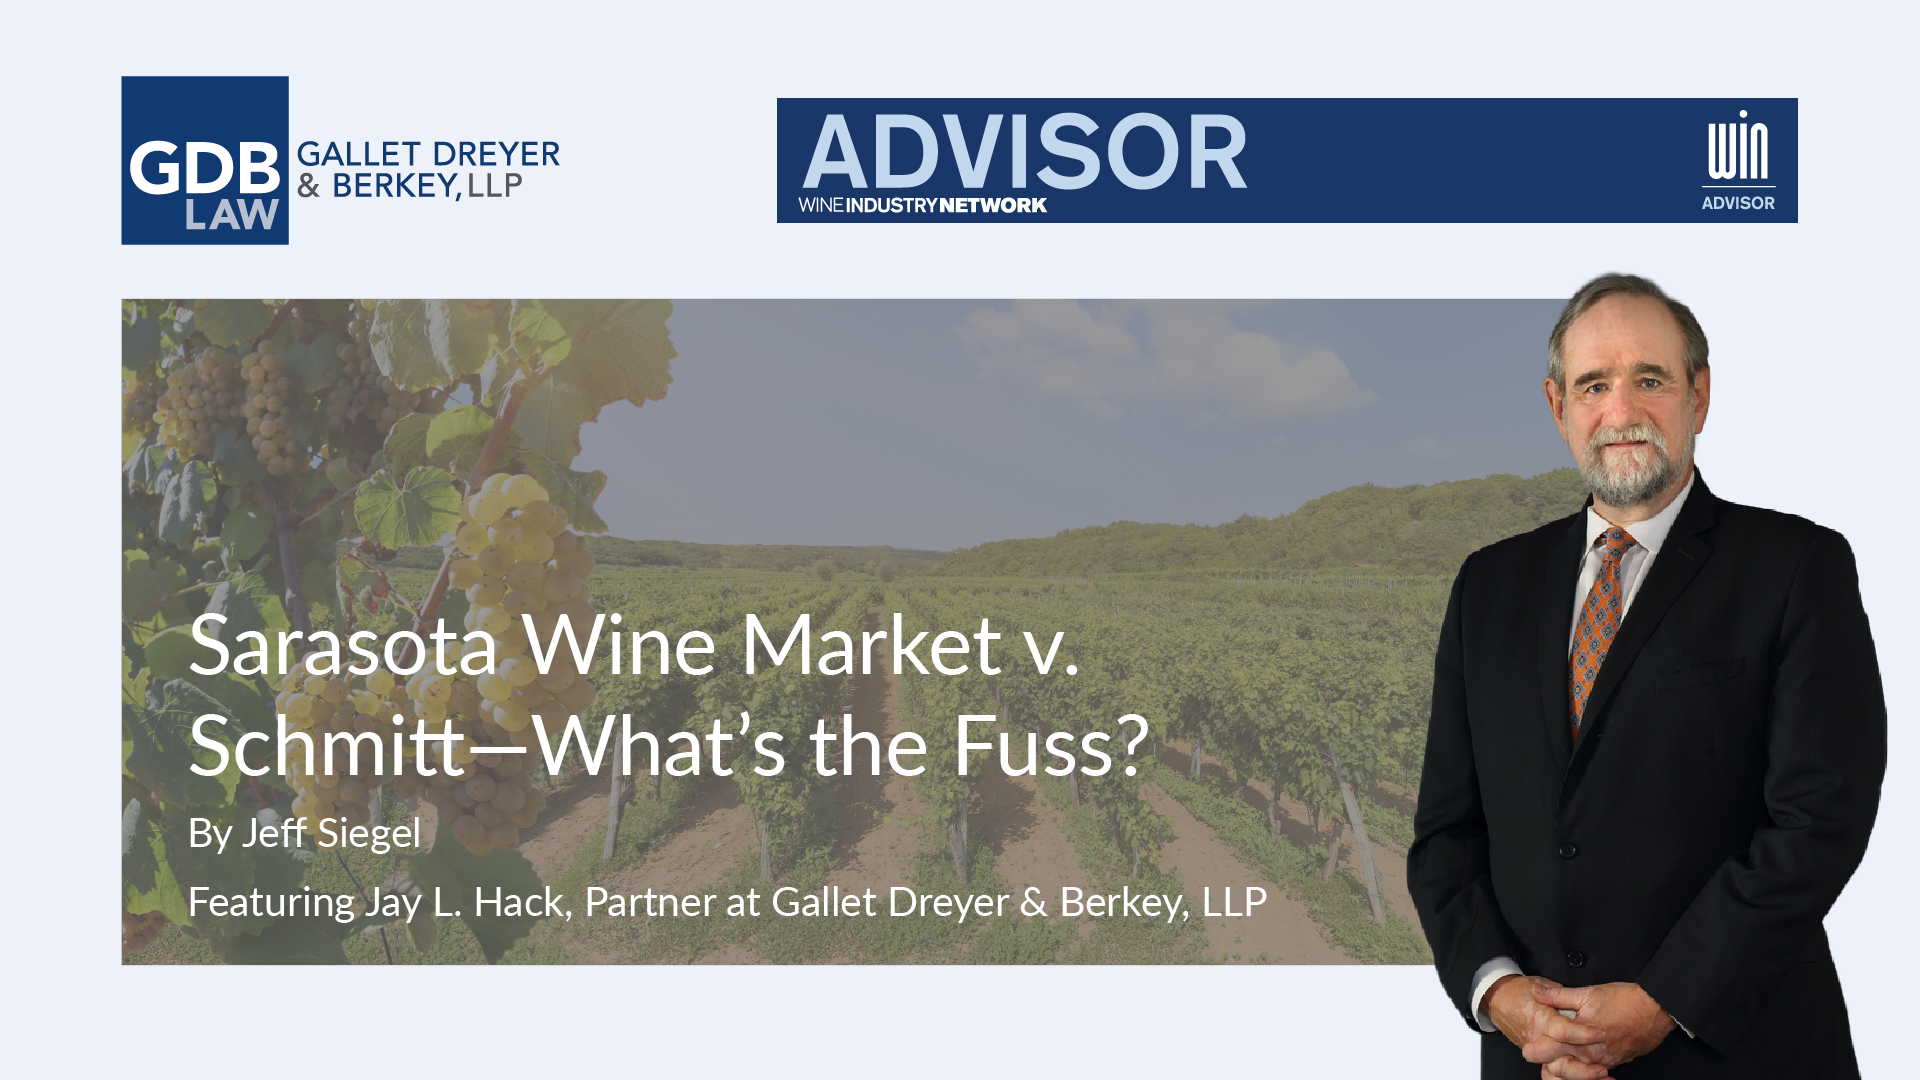 Wine Industry Network - Wine Industry Advisor